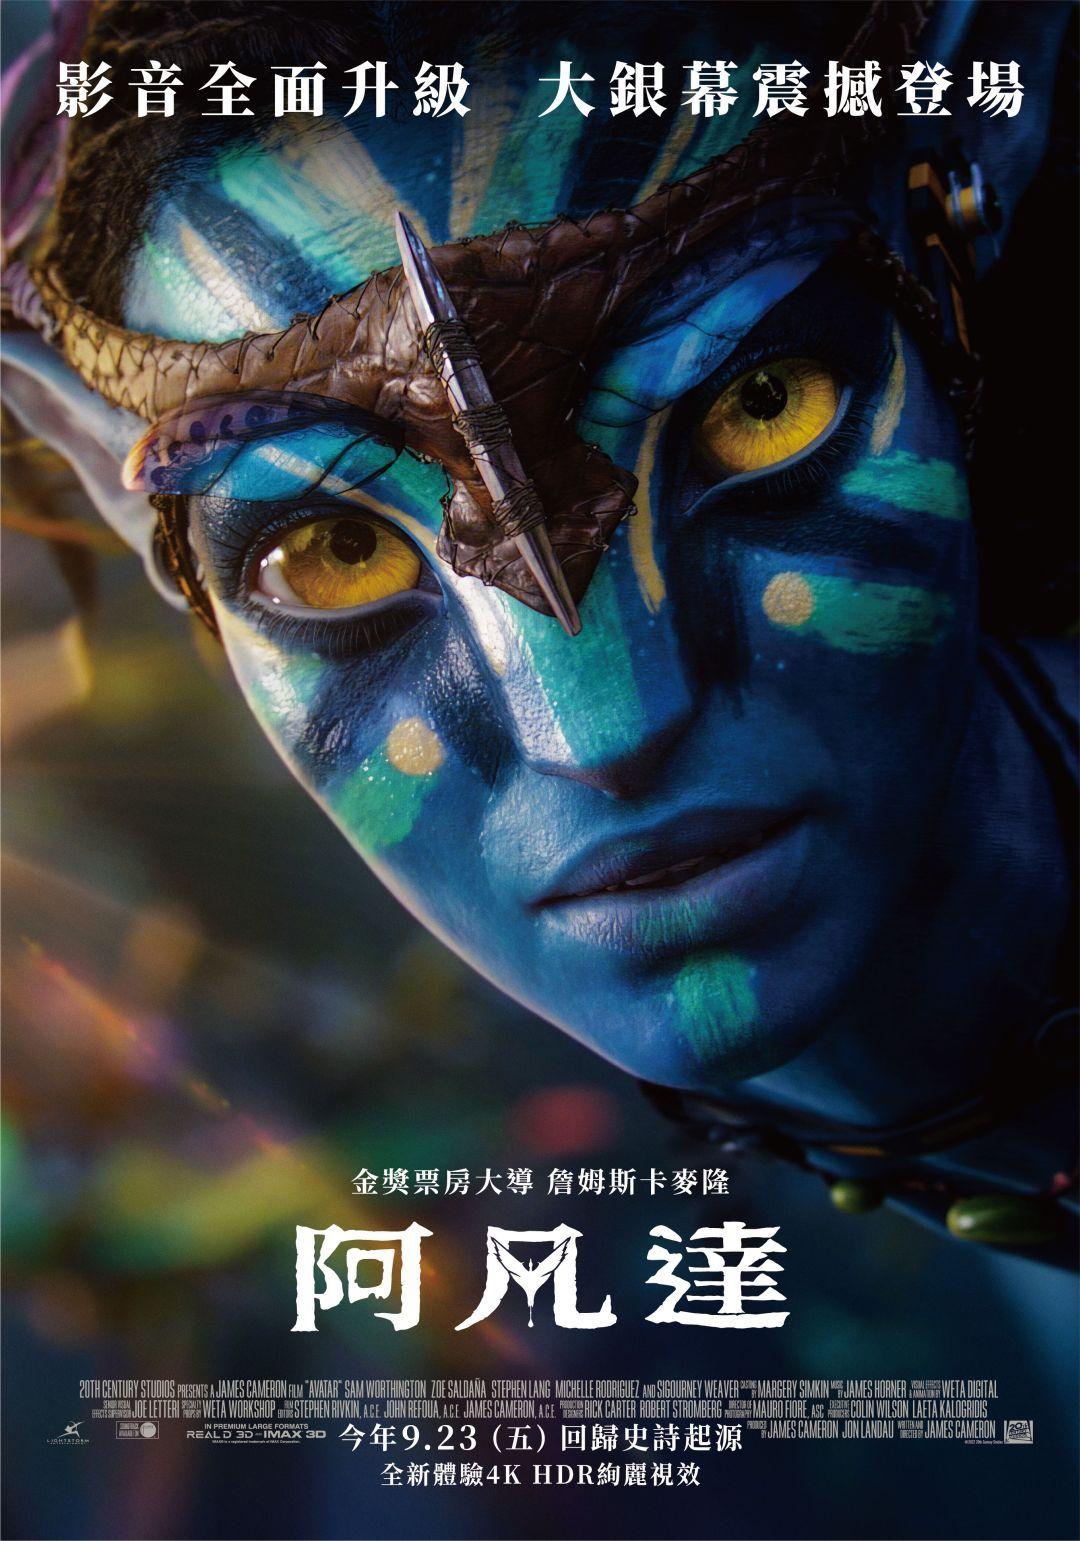 阿凡達（重映版）Avatar (Re-Release)